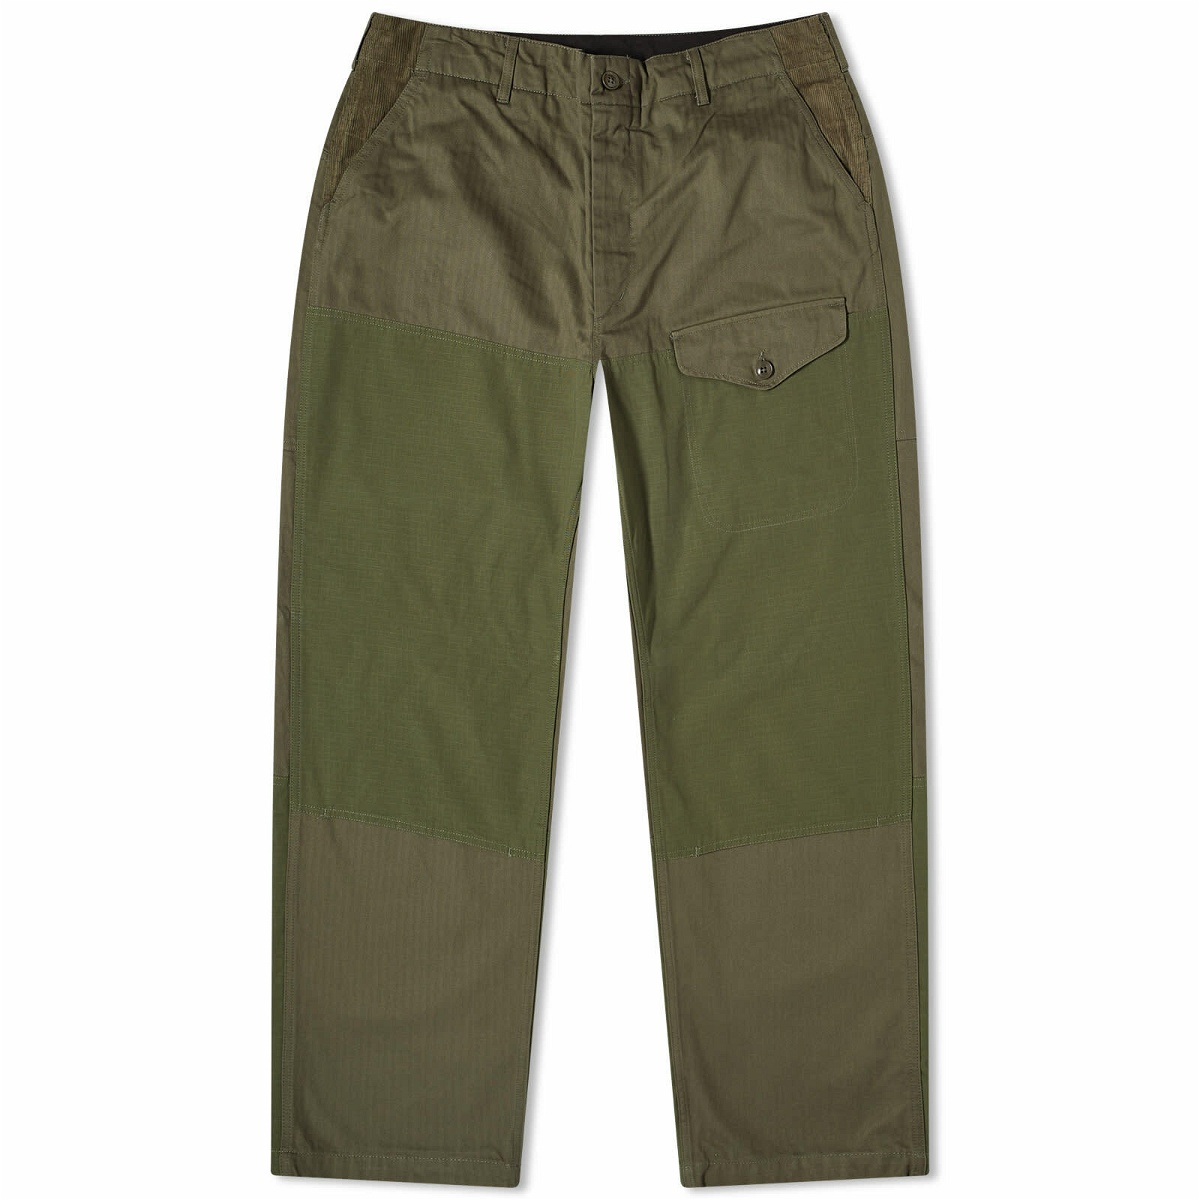 Engineered Garments Men's Field Pant in Olive Herringbone Twill ...